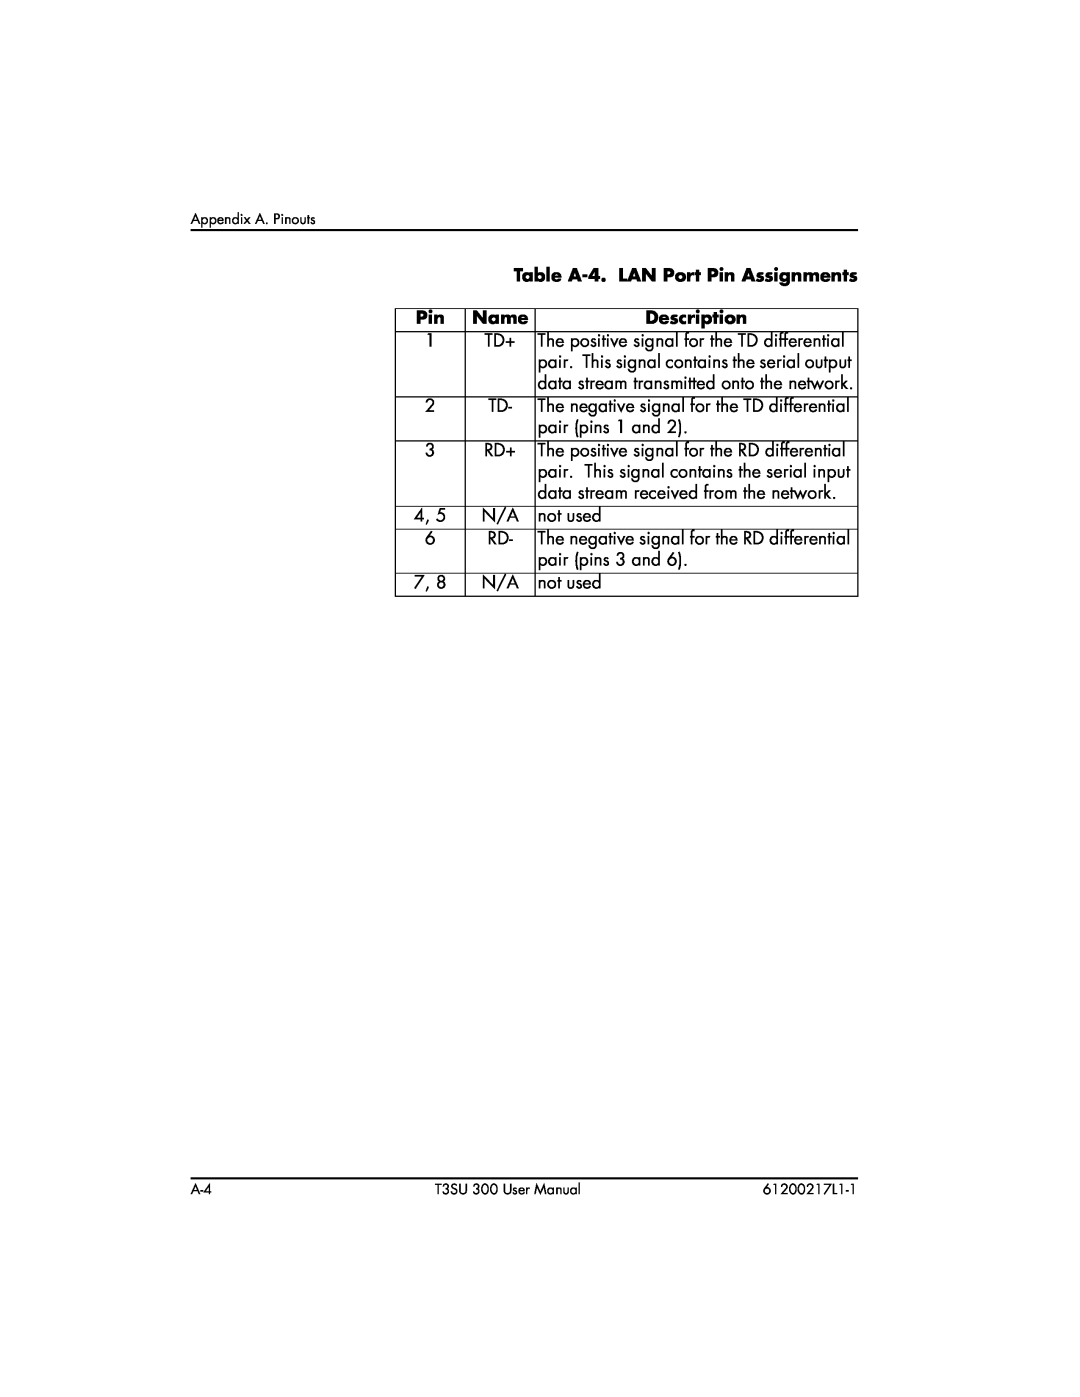 ADTRAN T3SU 300 user manual Table A-4. LAN Port Pin Assignments, Name, Description 